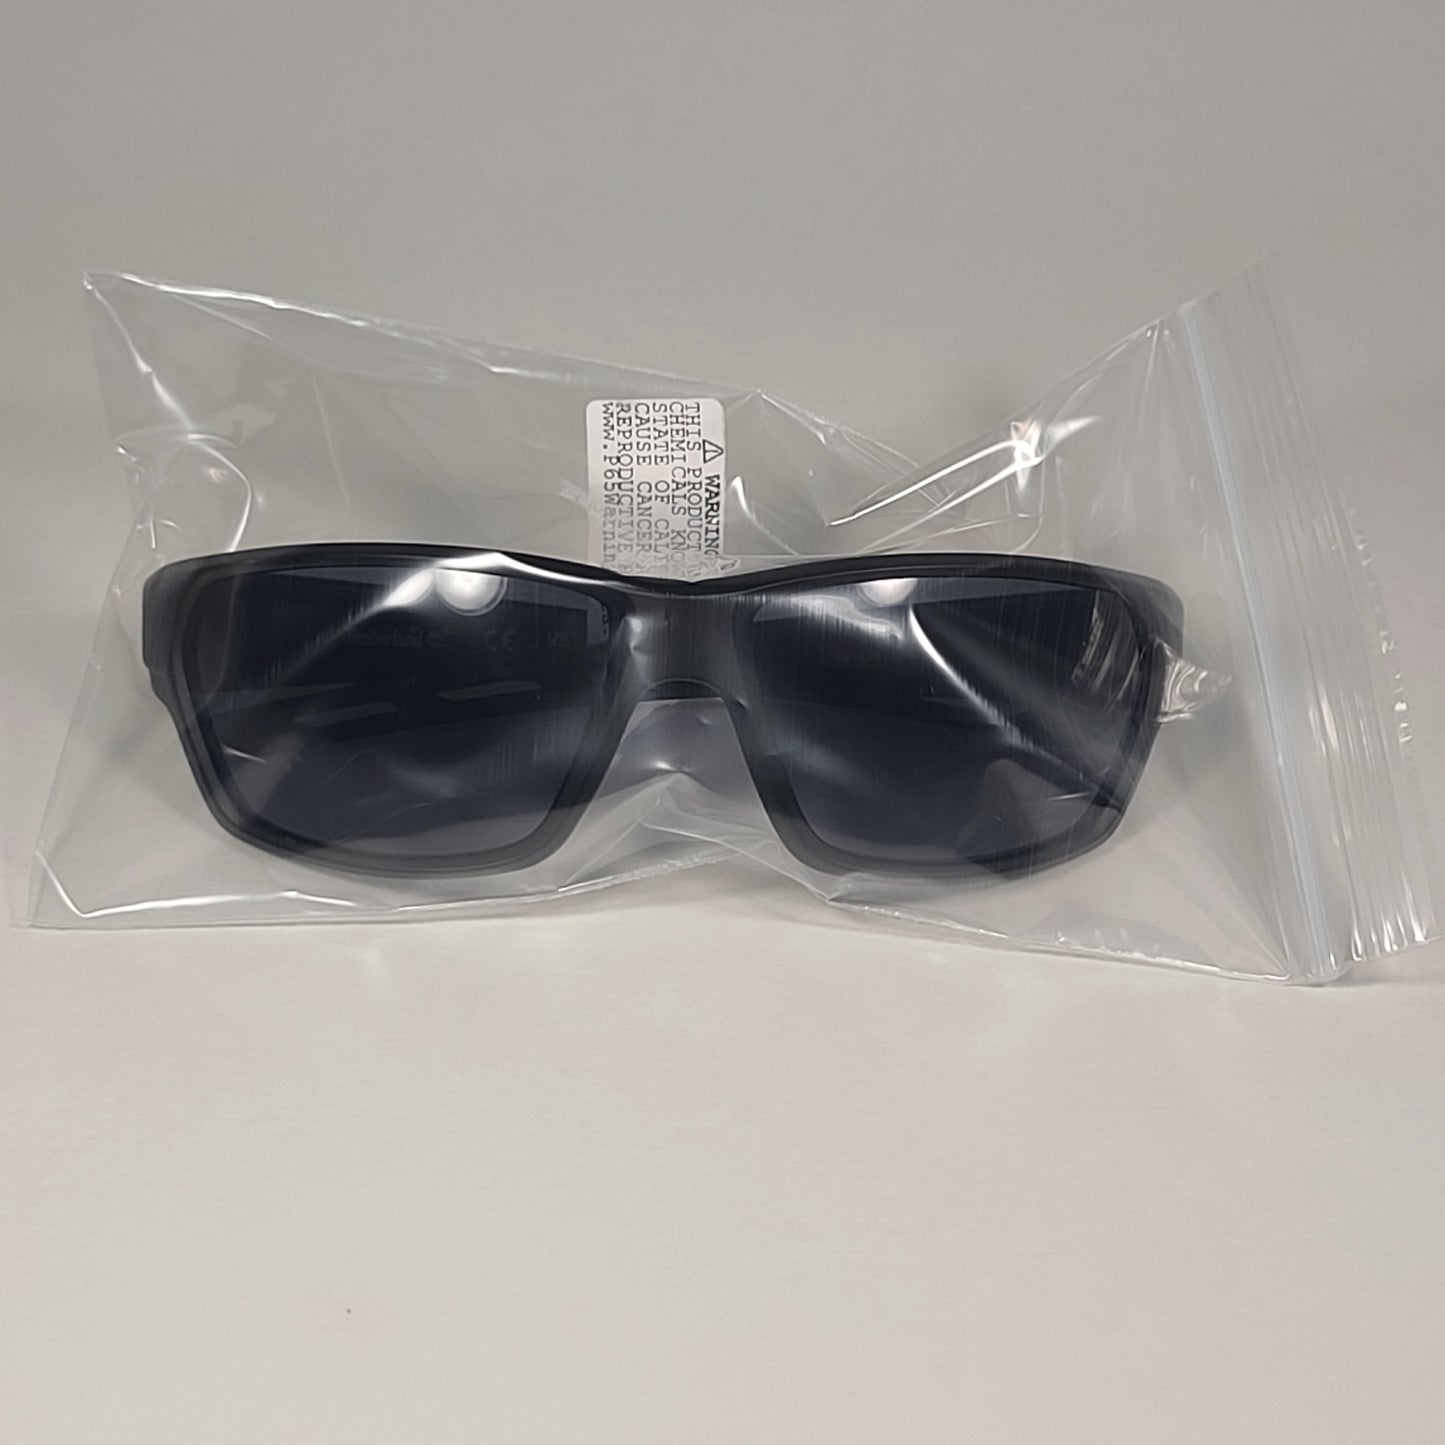 Timberland Wrap Sunglasses Matte Black Frame Gray Tinted Lens TB7236 02A - Sunglasses